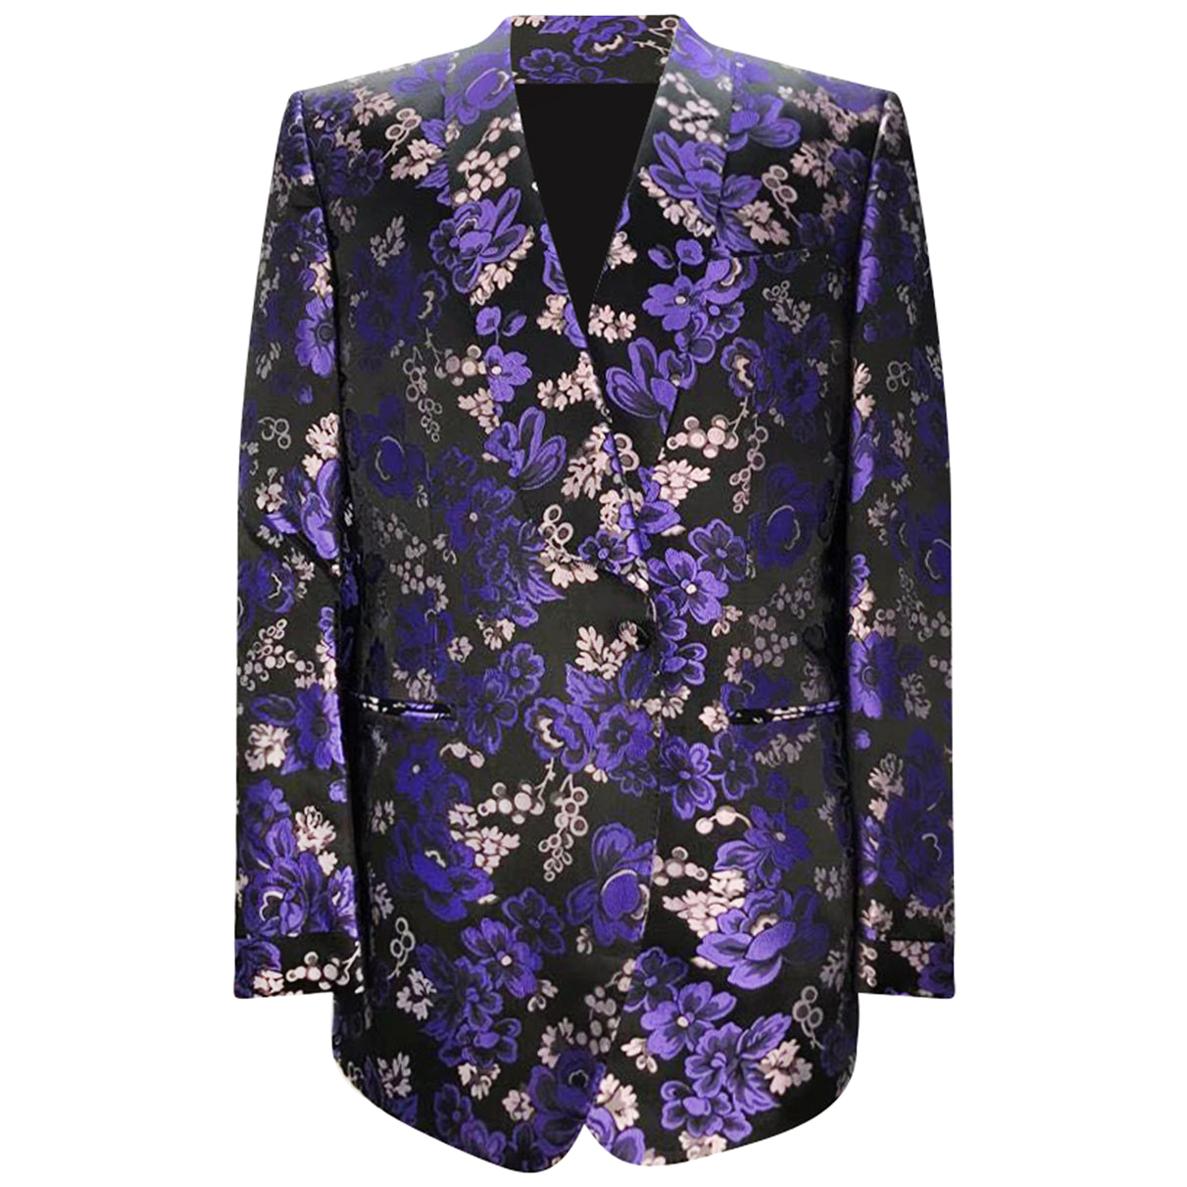 Rare 2014 Look #27 Tom Ford Silk Iridescent Floral Jacquard Jacket 